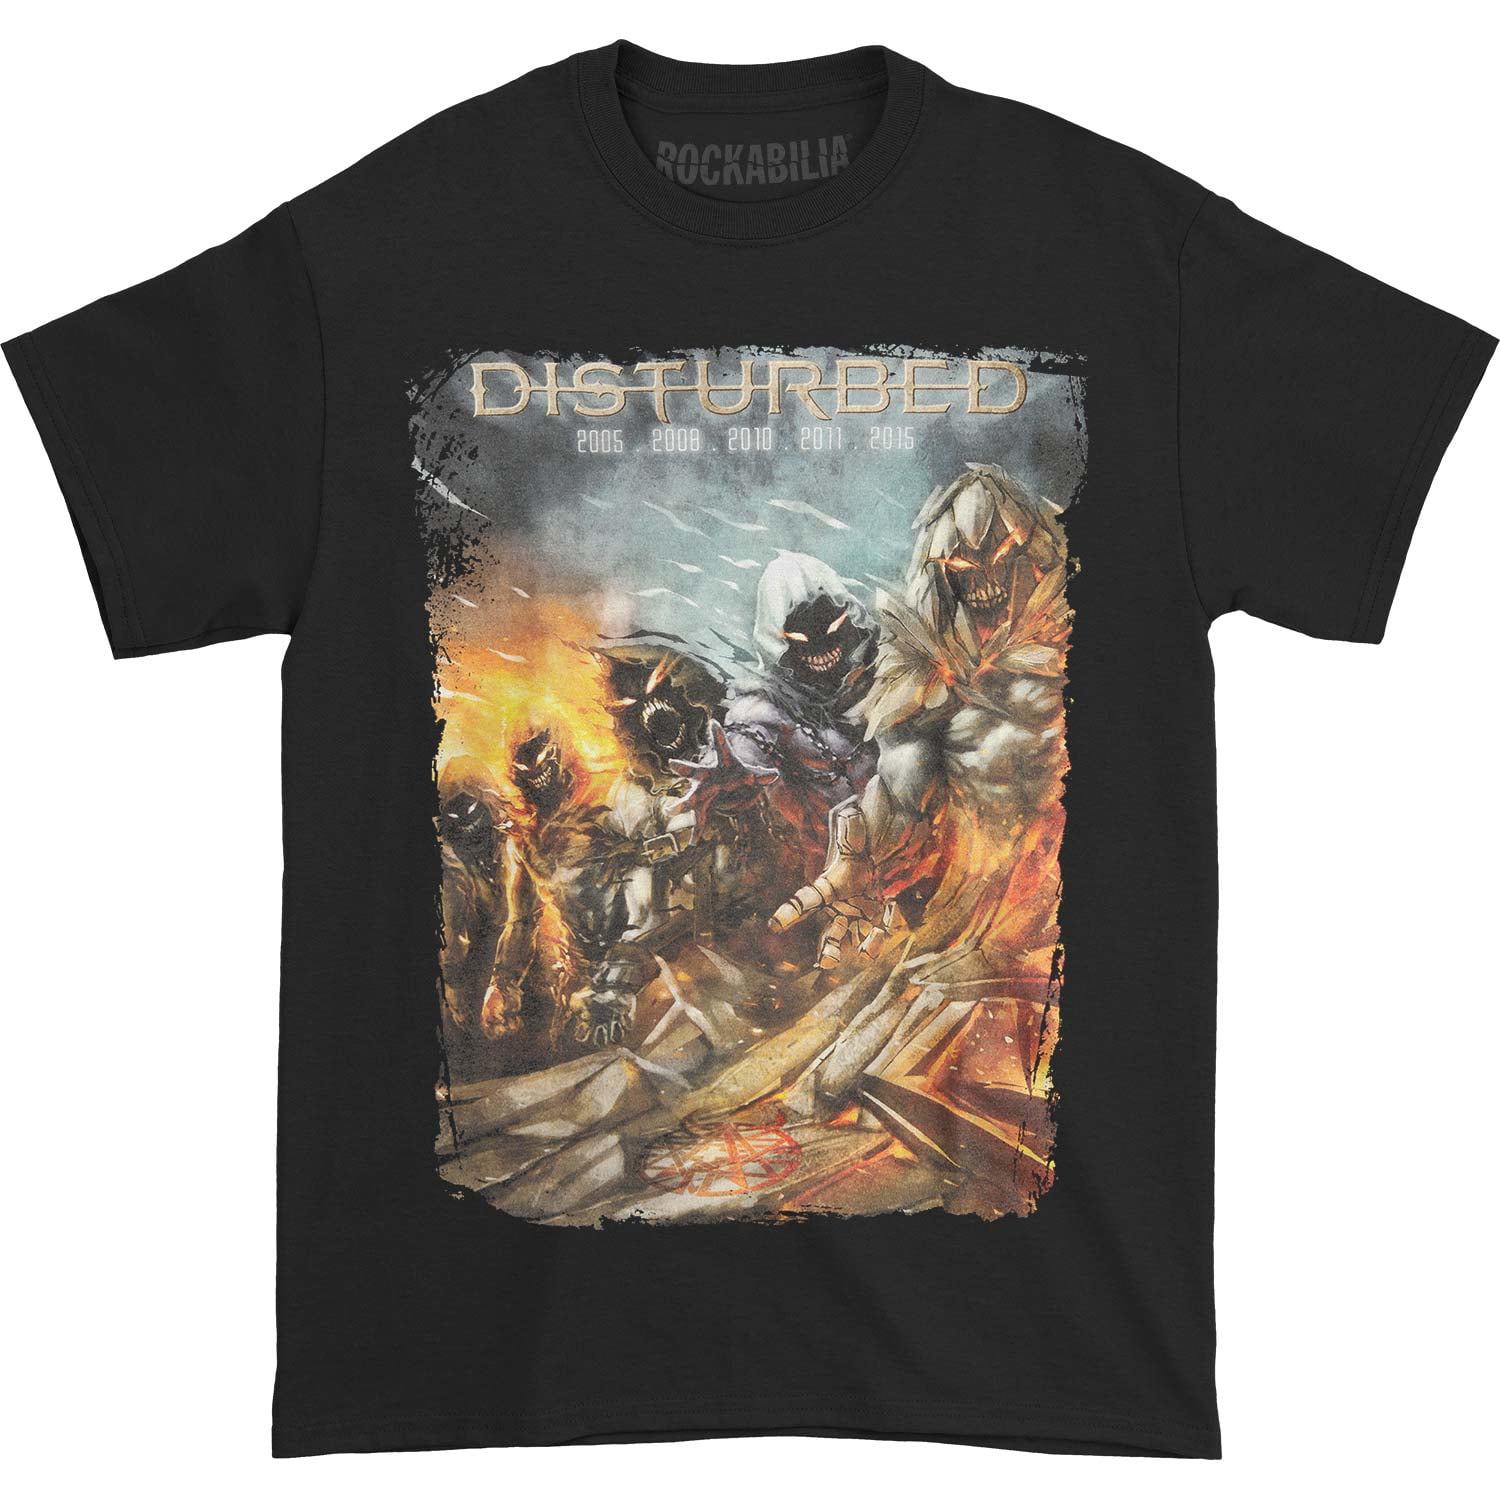 Disturbed - Disturbed Men's Evolution T-shirt Black - Walmart.com ...